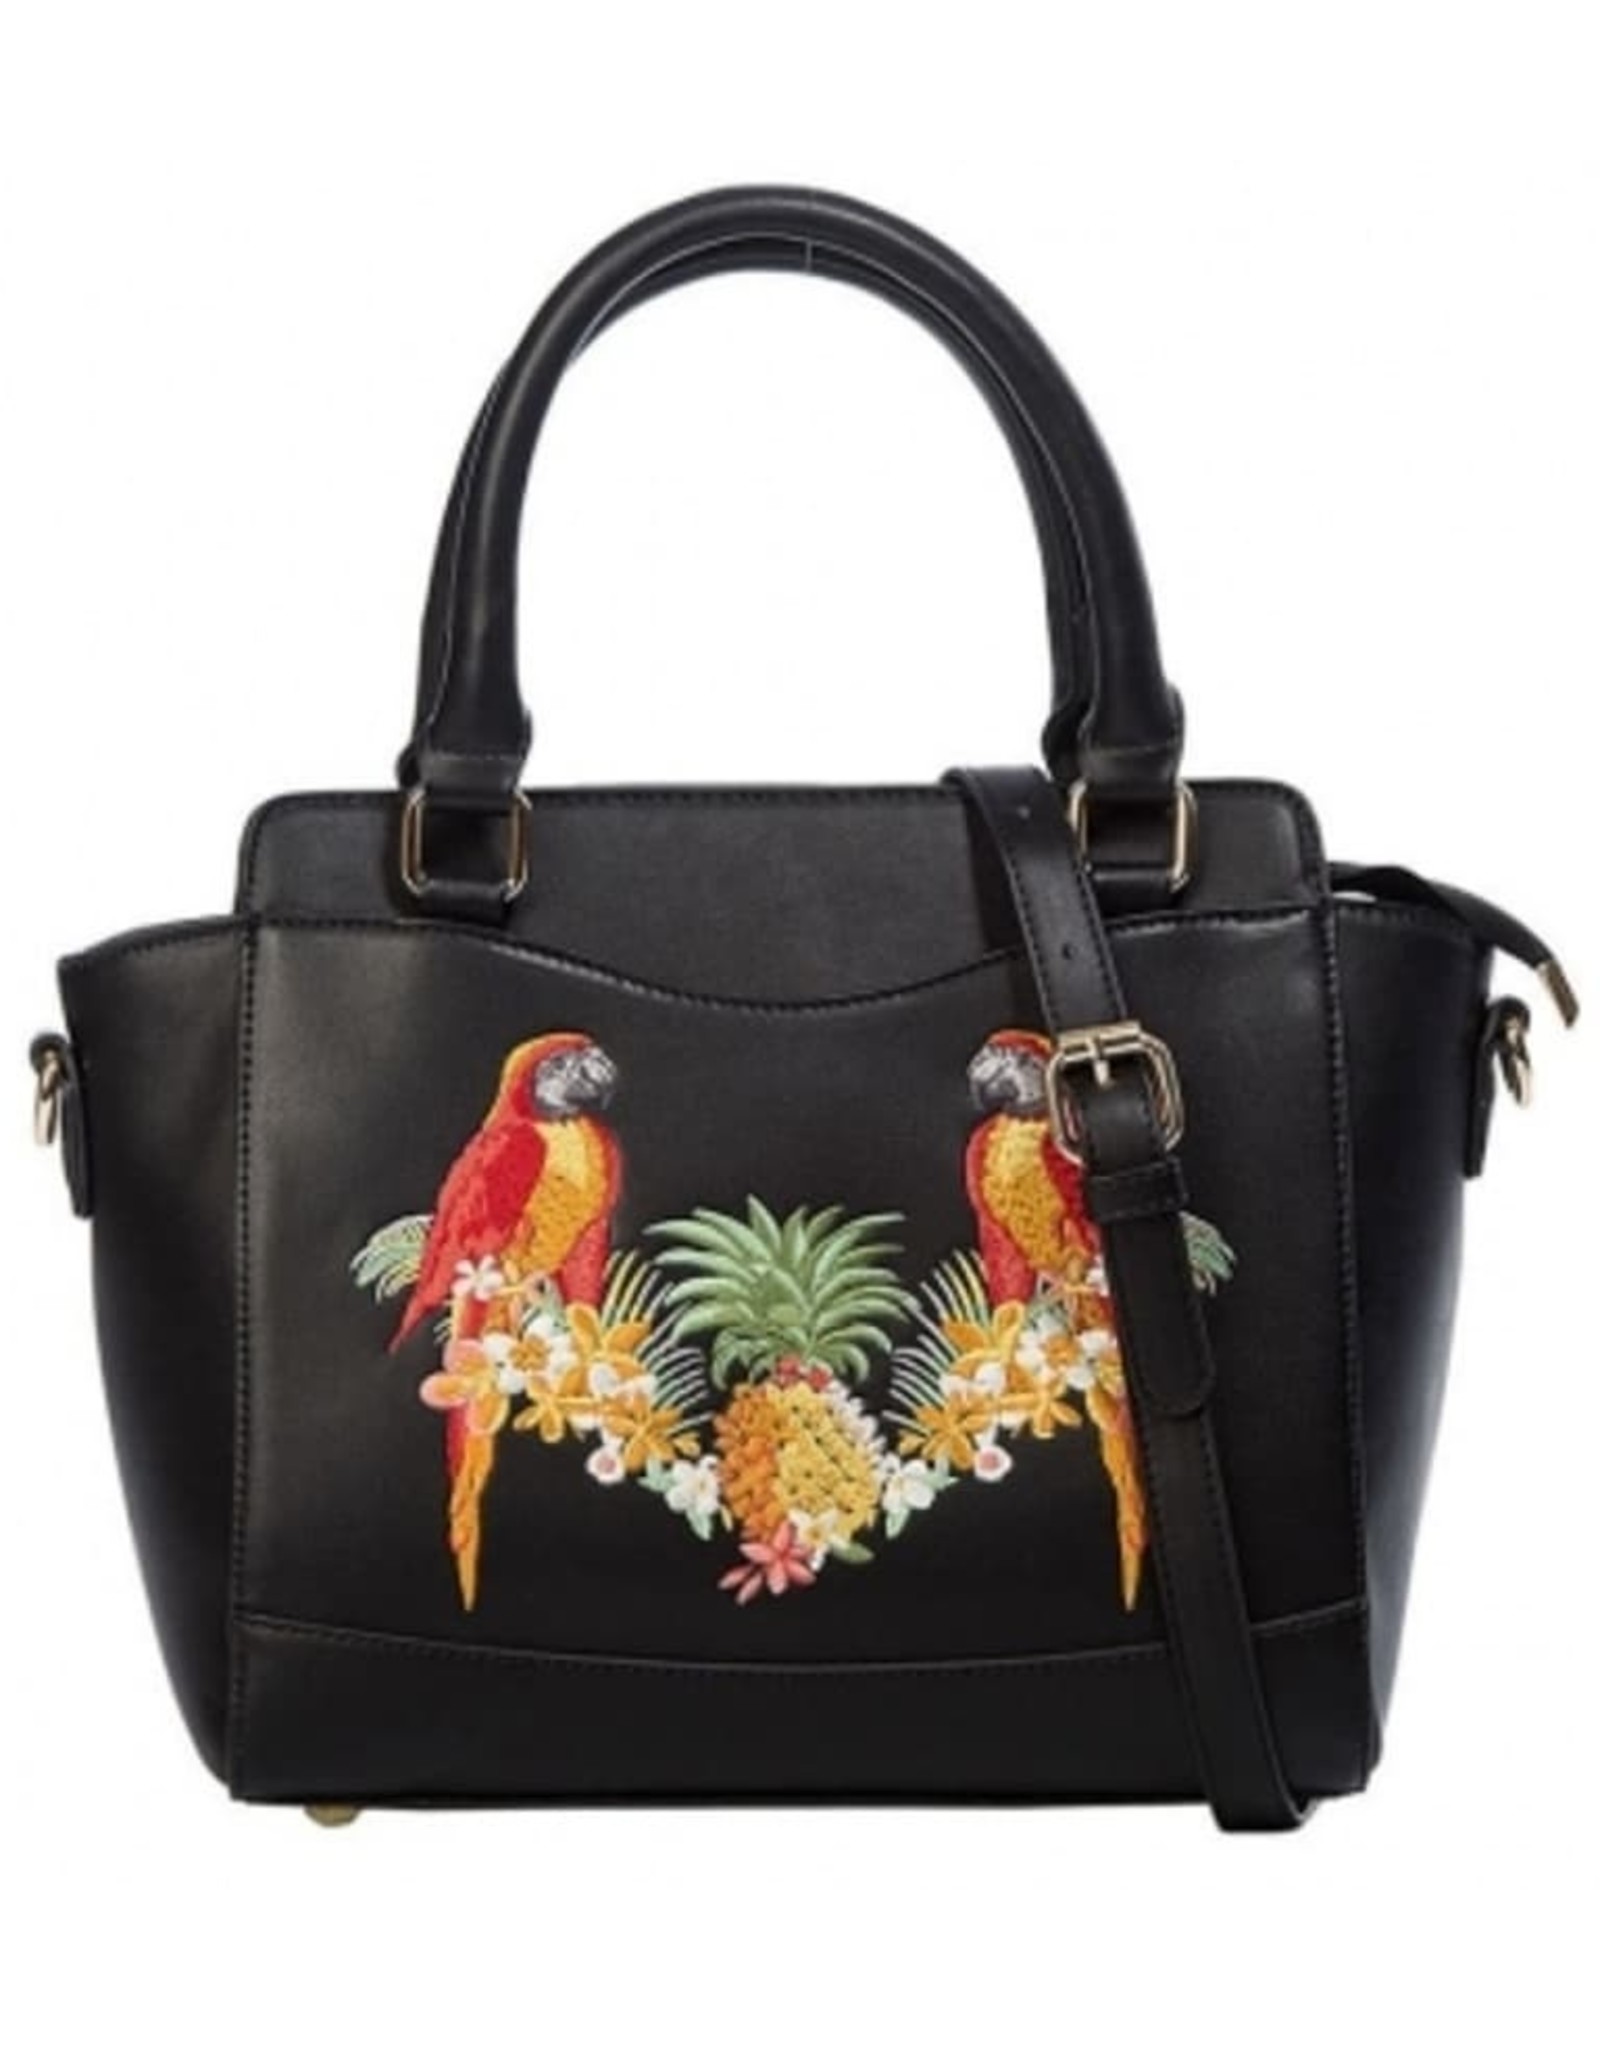 Banned Retro bags  Vintage bags - Banned Retro handbag Seychelles